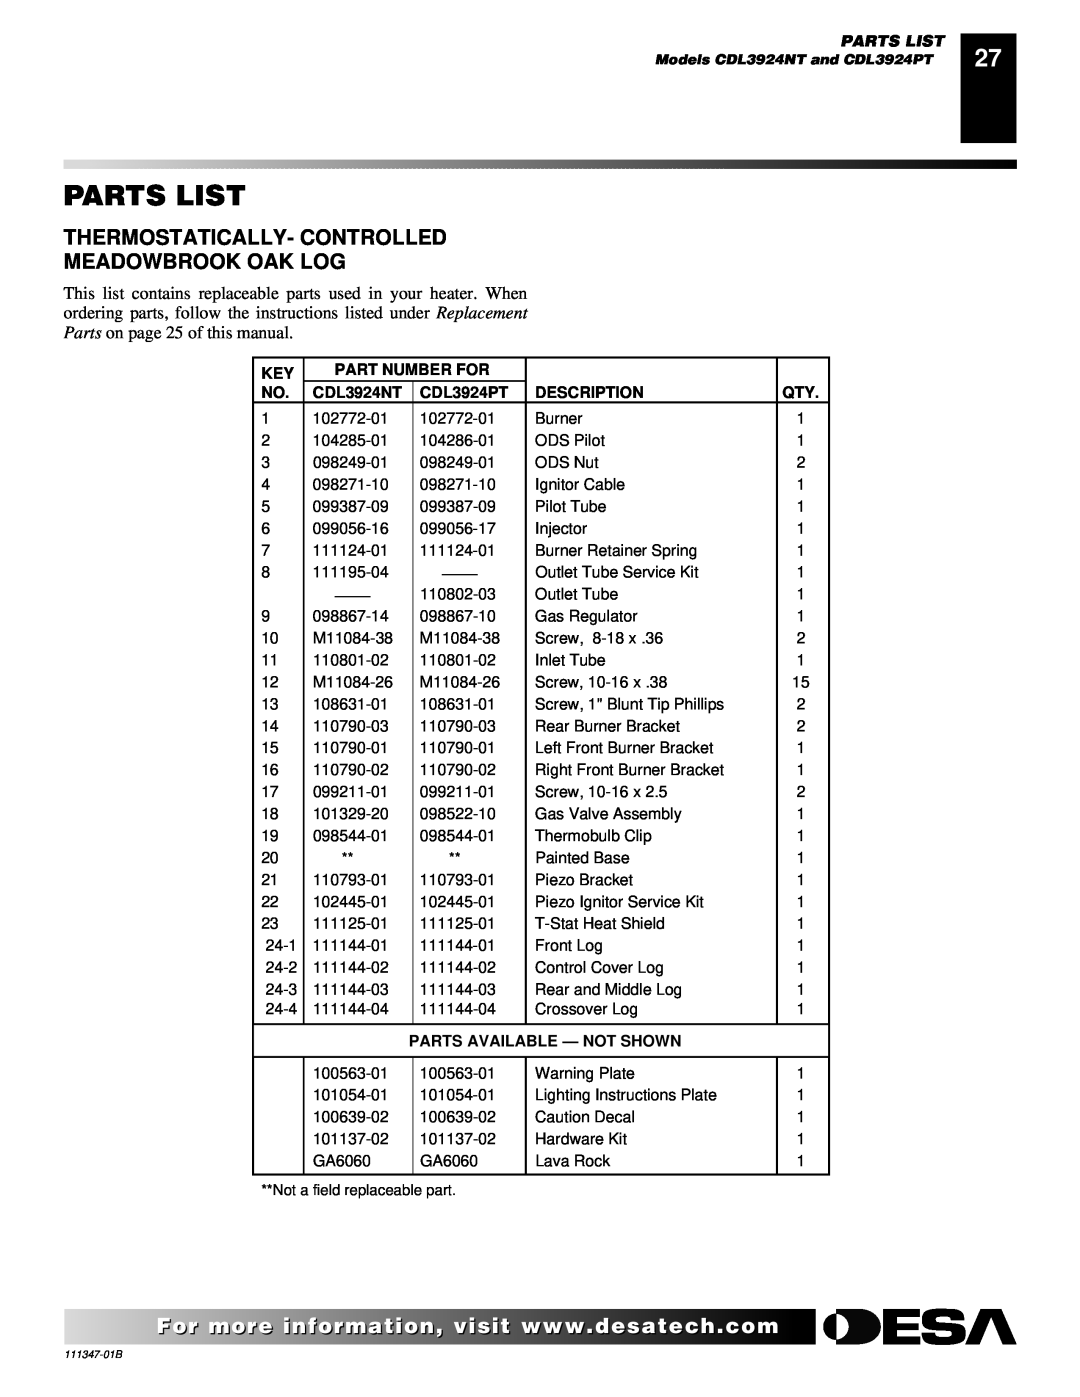 Desa LSL3124N Thermostatically- Controlled Meadowbrook Oak Log, Parts List, Part Number For, CDL3924NT, CDL3924PT 